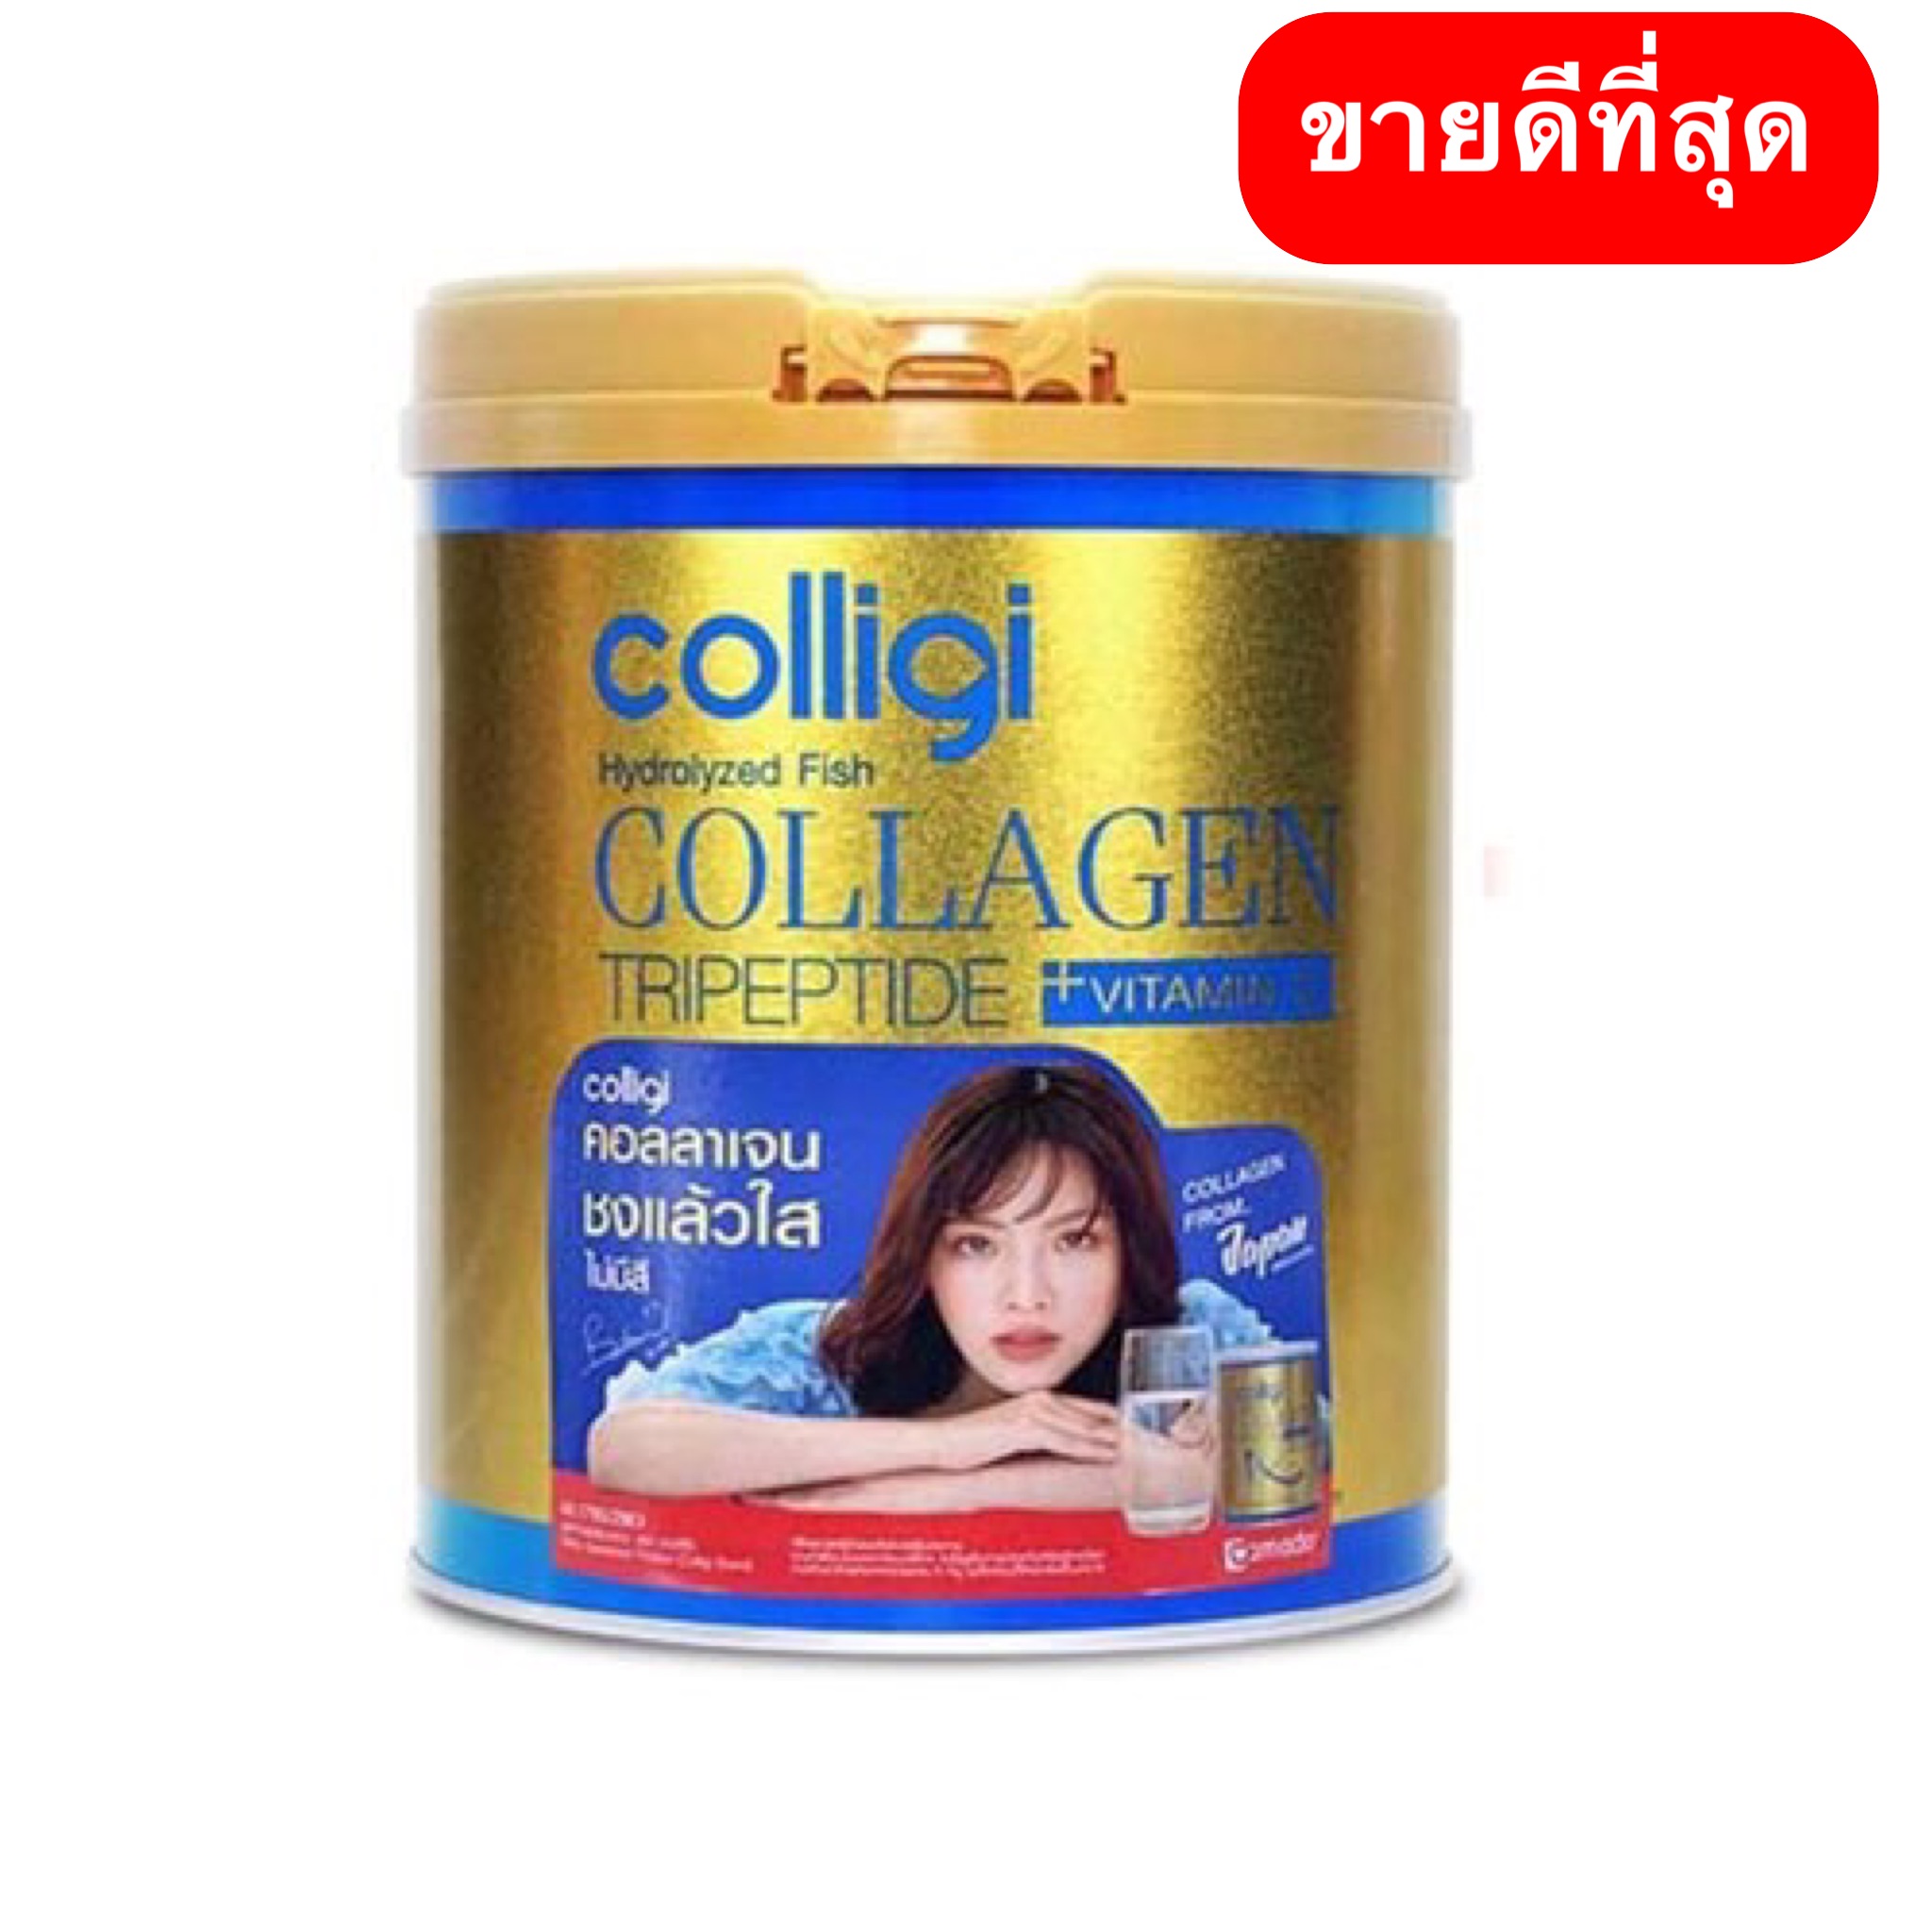 Amado Colligi Collagen ผสมวิตามินซี 201 กรัม (กระป๋องใหญ่) ล็อตใหม่